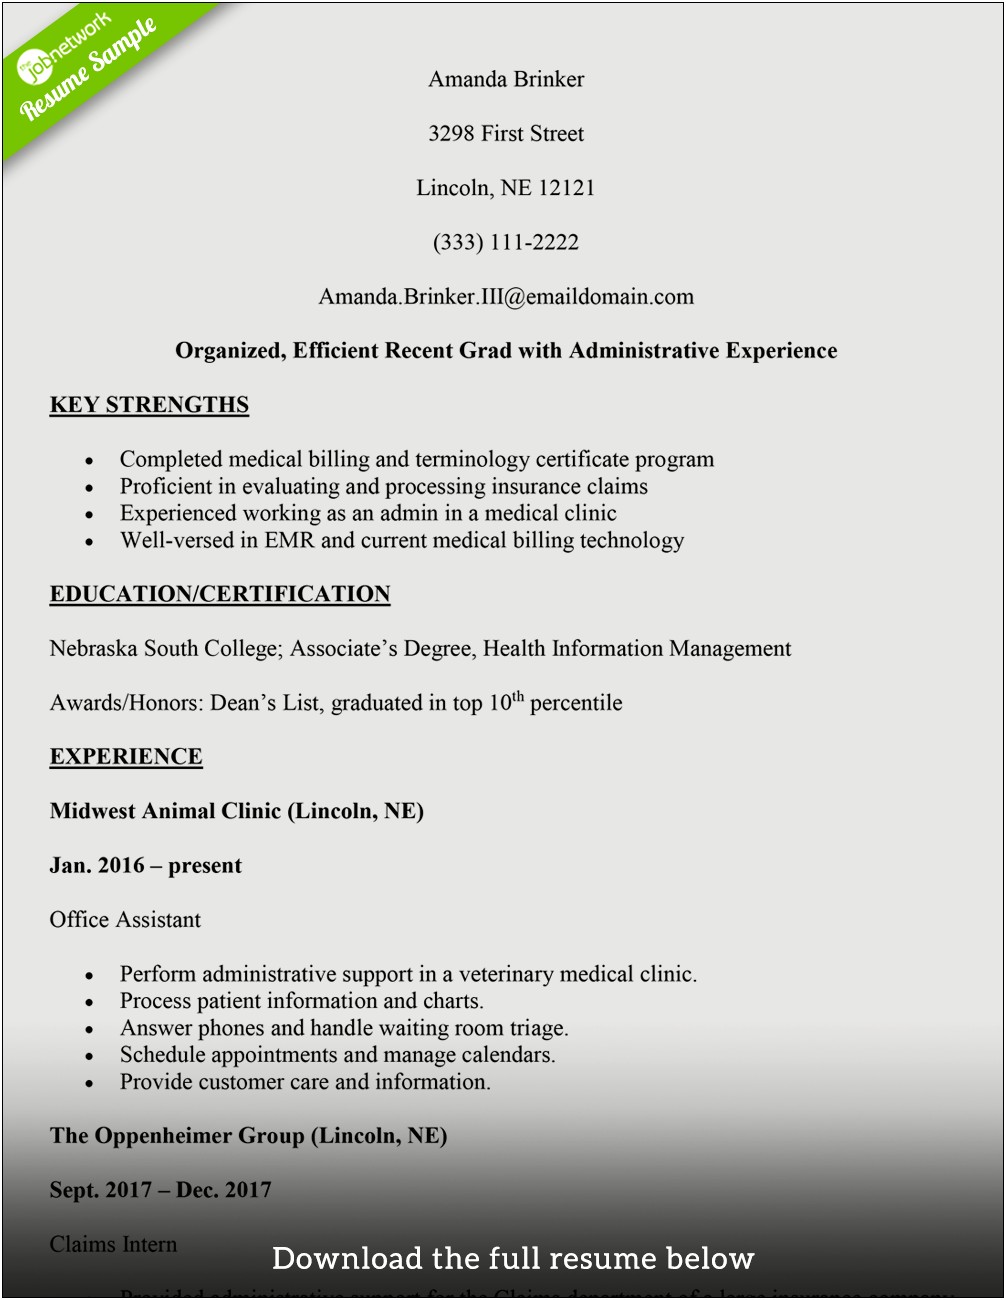 Sample Resume For Medical Billing And Coding